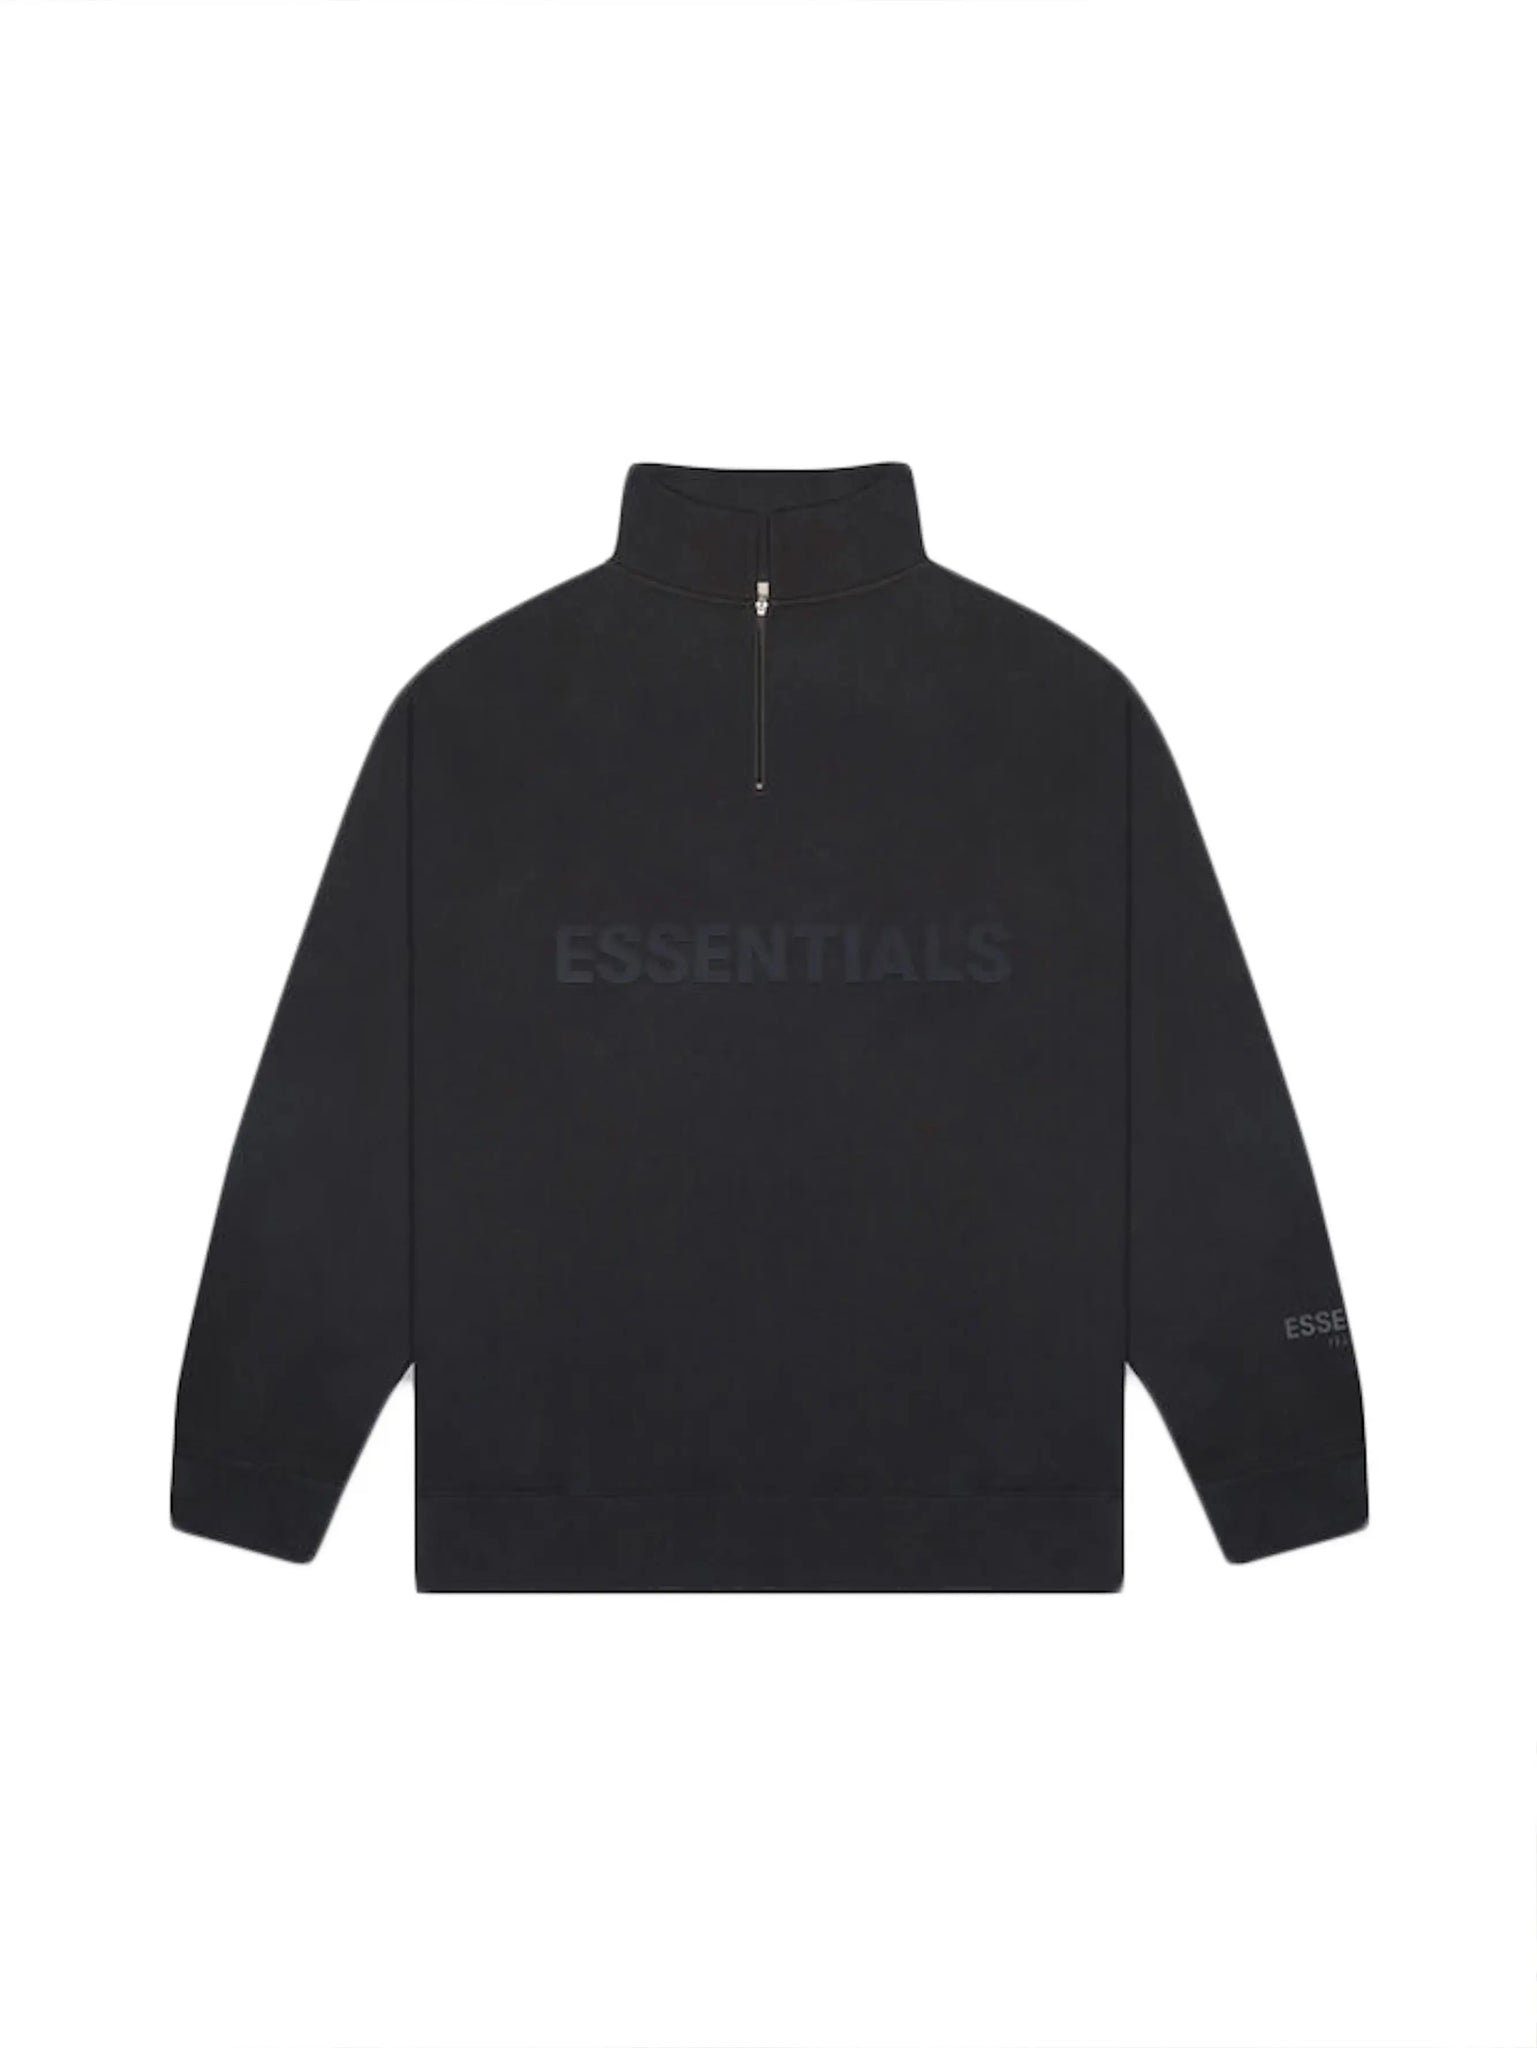 Fear of God Essentials Half Zip Pullover Sweater Dark Slate/Stretch Limo/Black in Melbourne, Australia - Prior